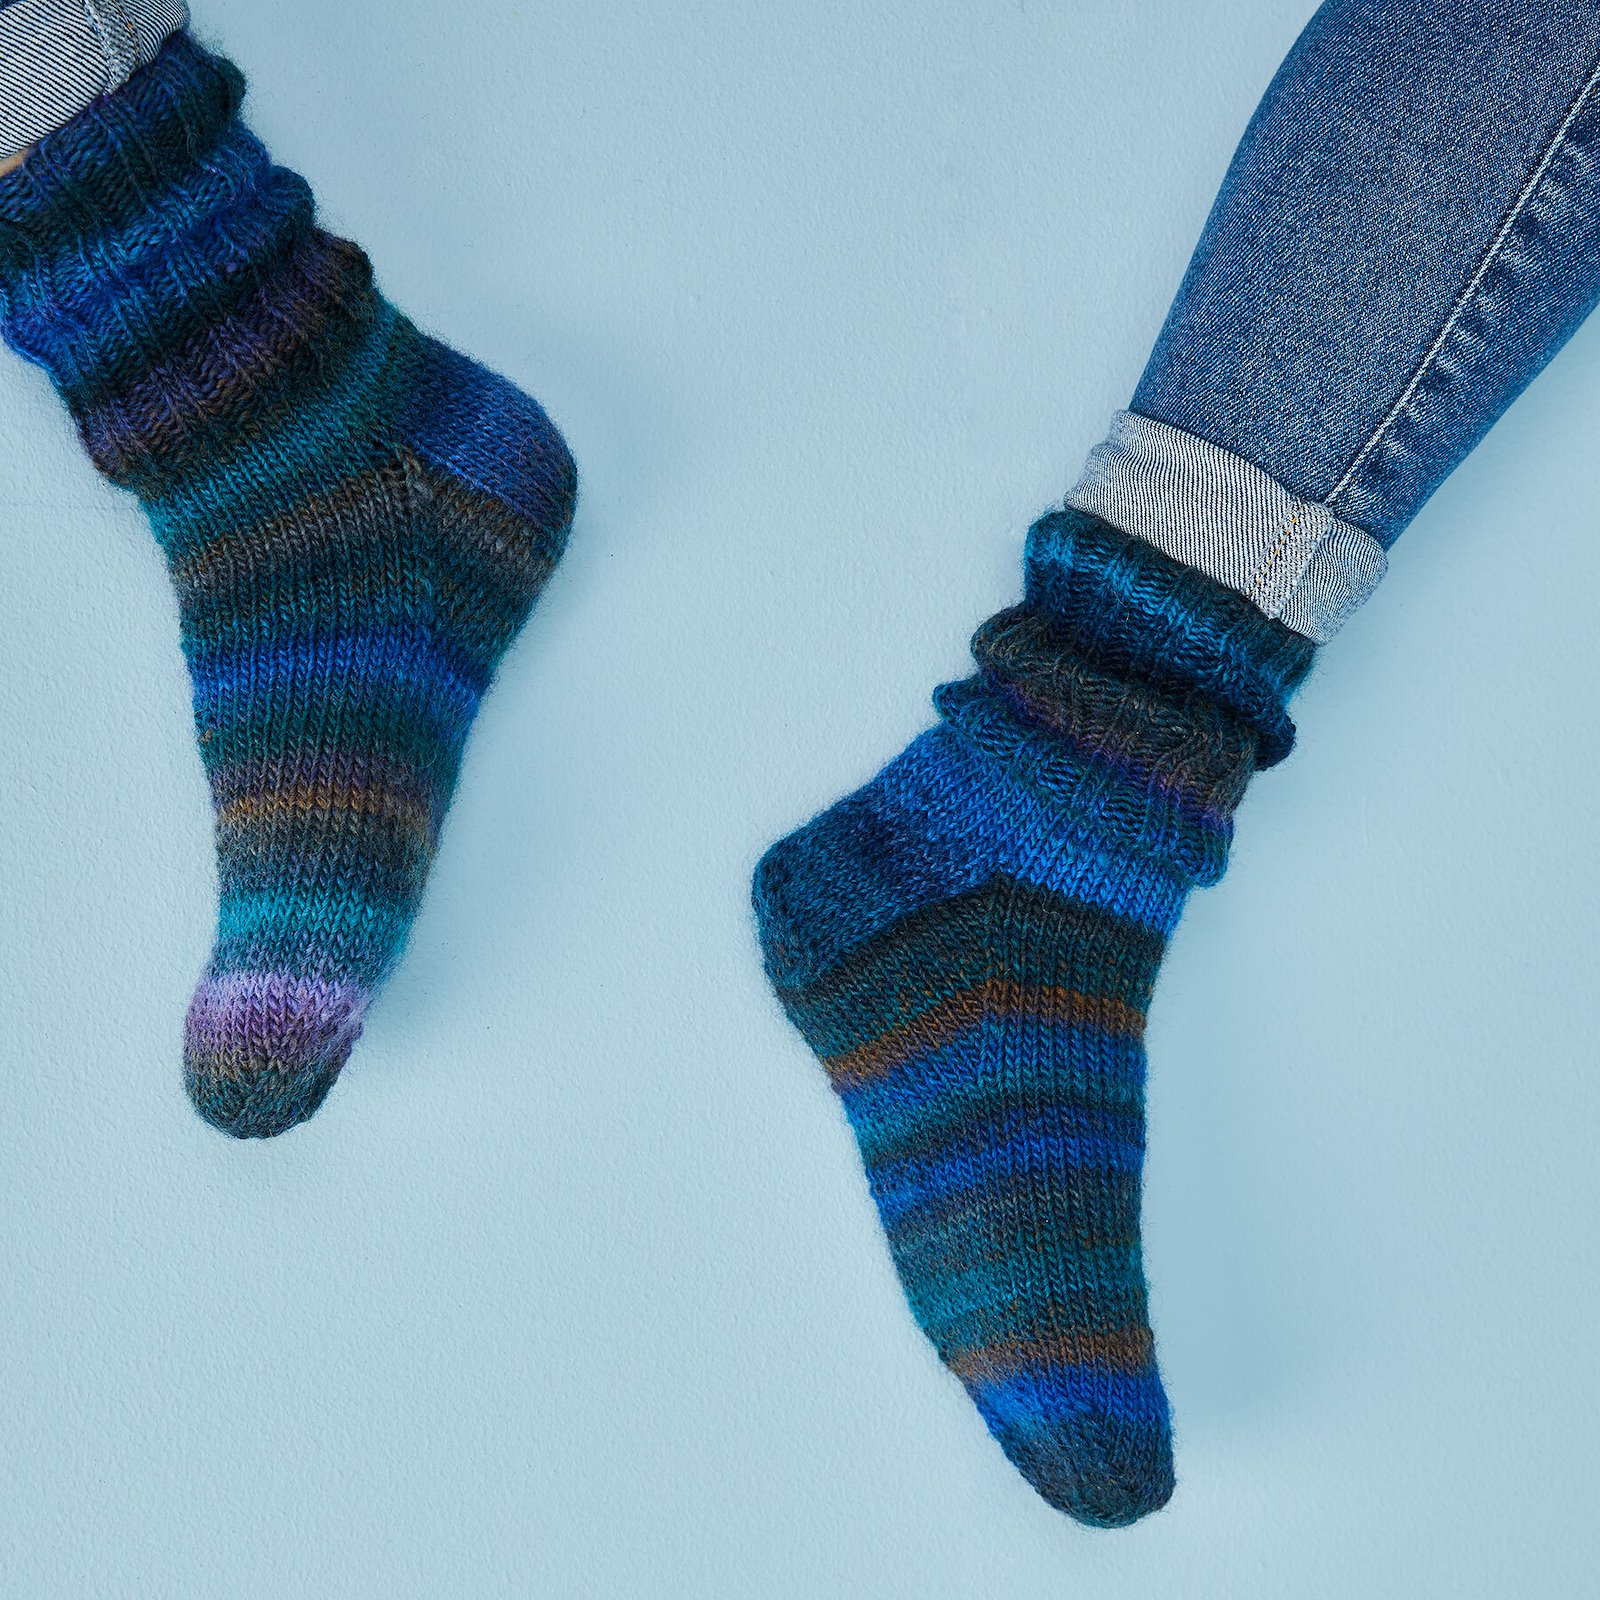 FRAYA knitting pattern - Lazy Sunday Socks, accessories - Playful 90000037_fraya3034_sskit